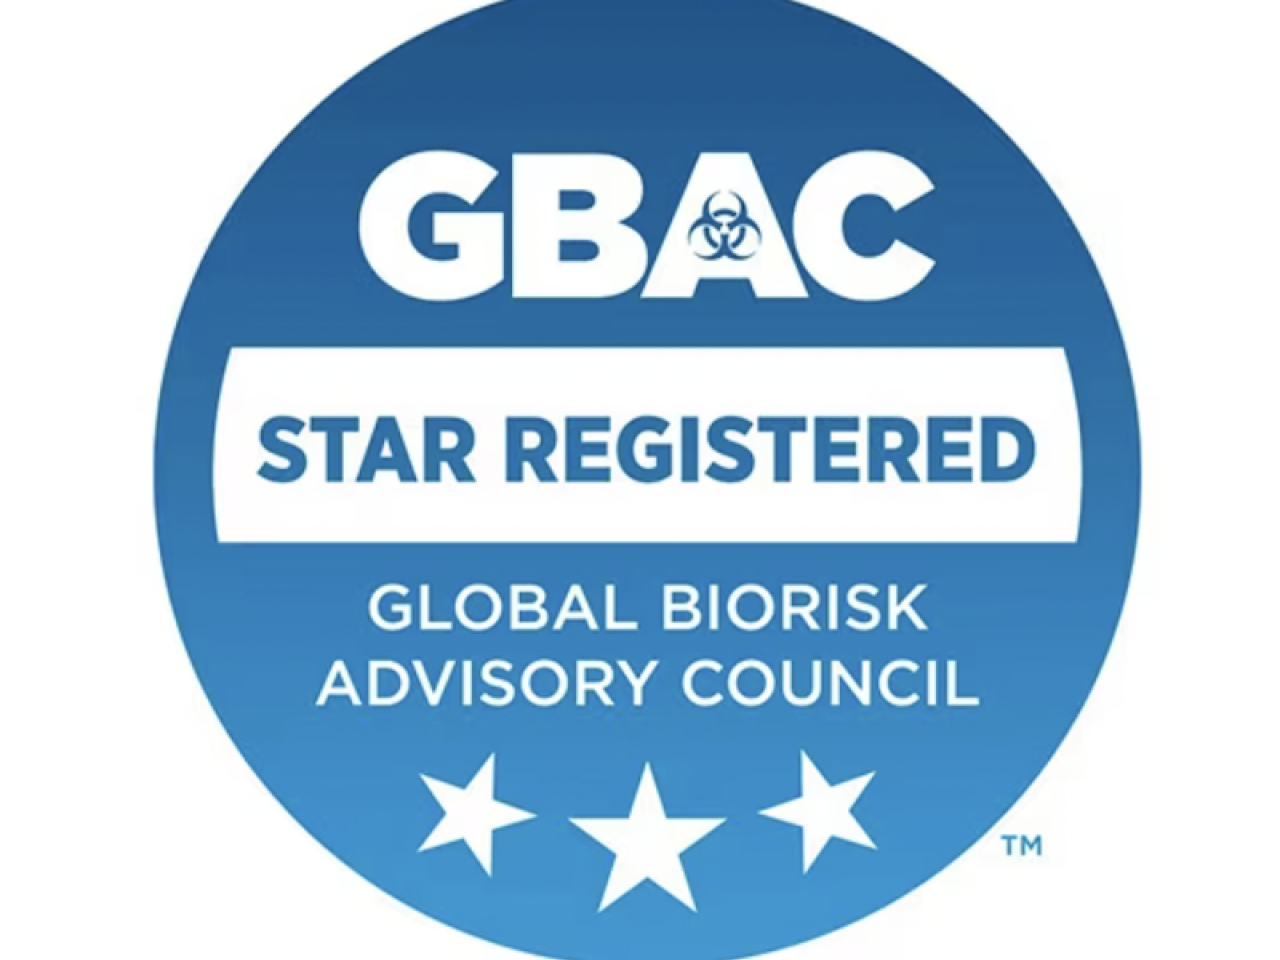 GBAC Star Registered logo. Global BioRisk Advisory Council